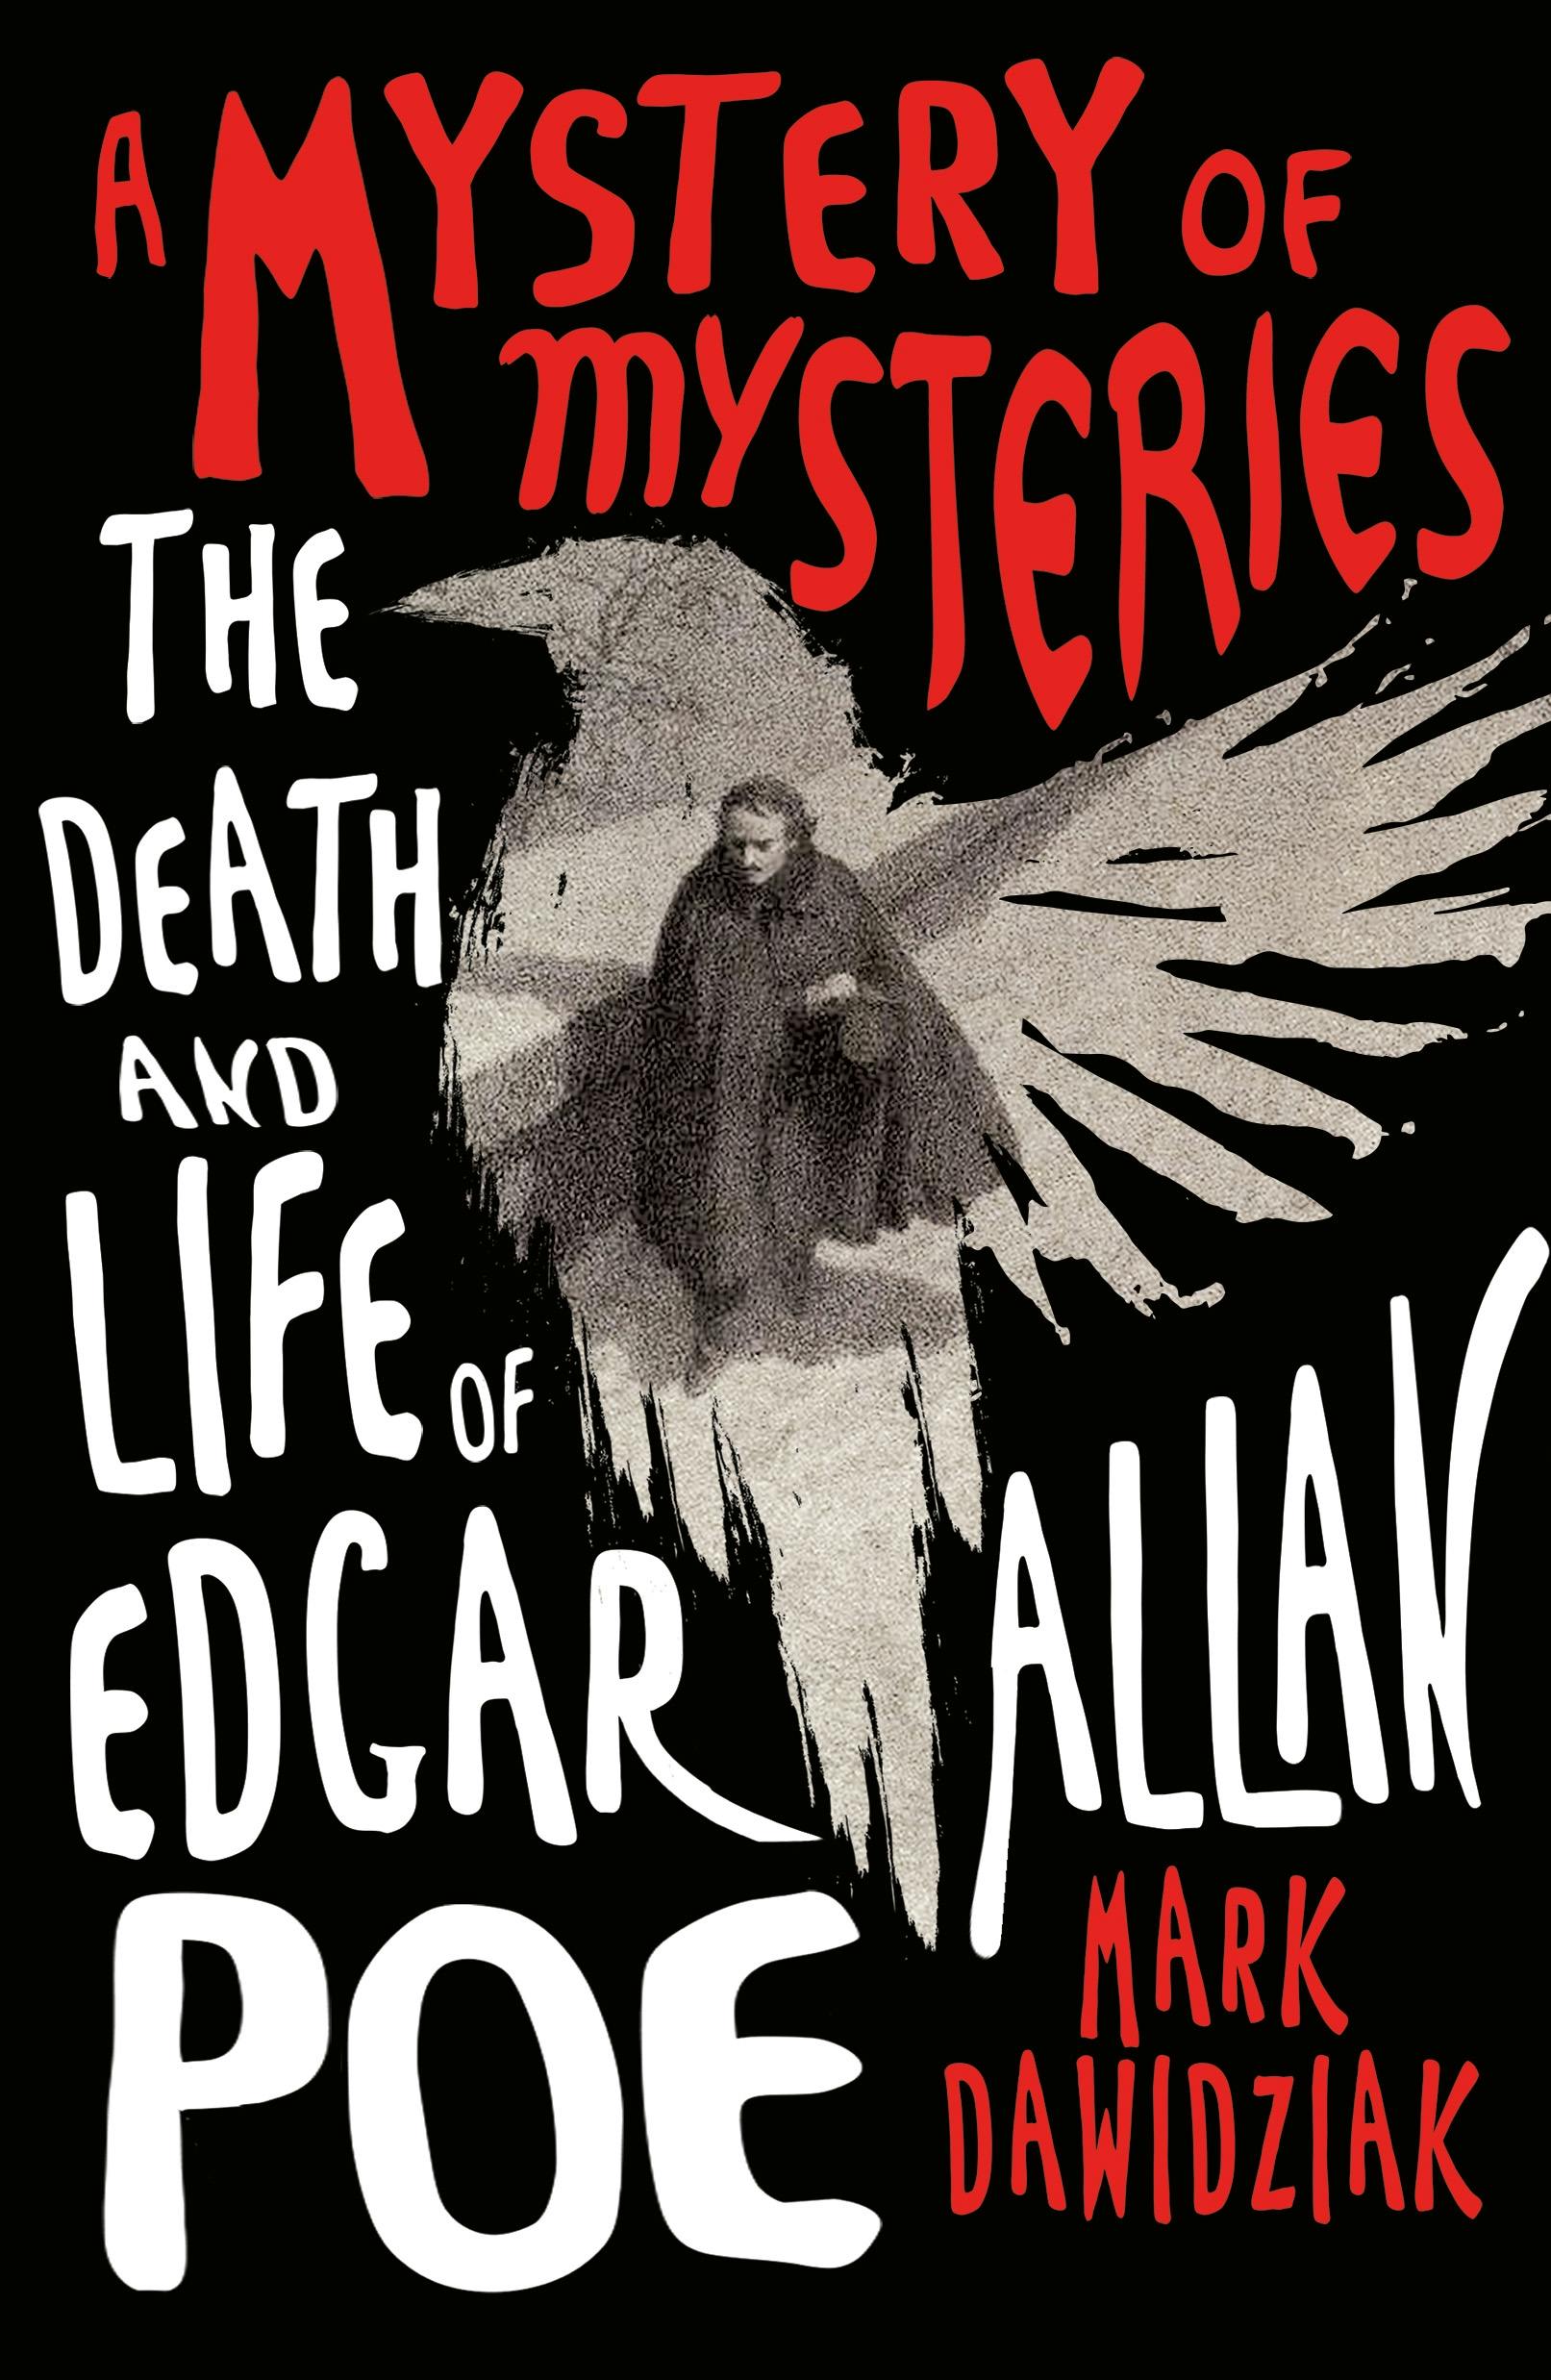 Edgar Allan Poe and His Tumultuous Romances (U.S. National Park